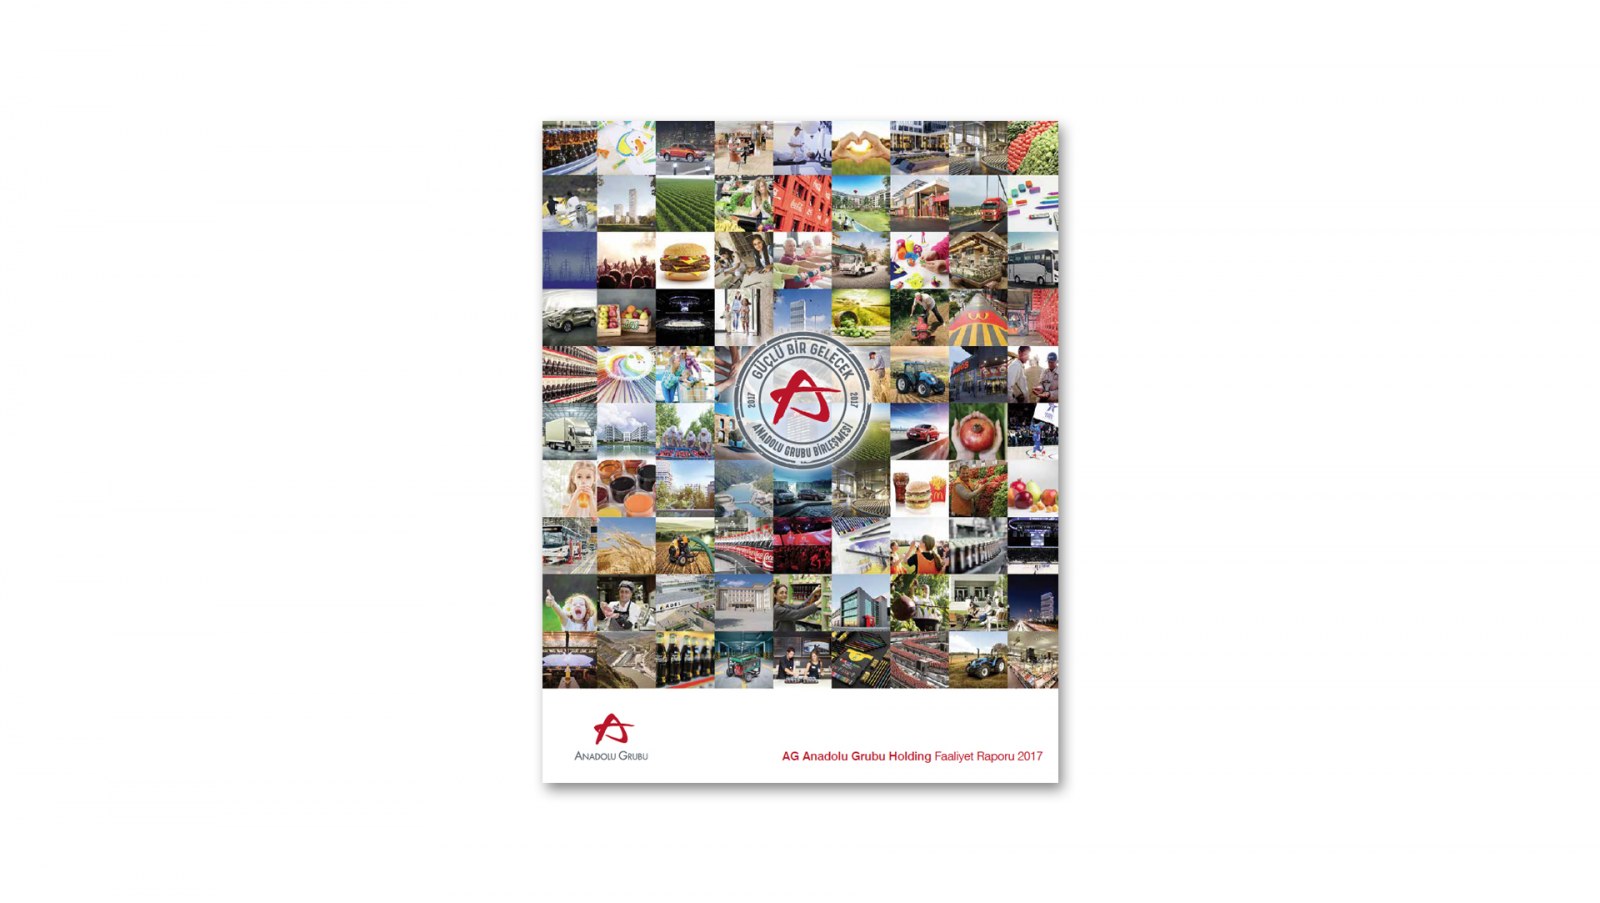 AG ANADOLU GRUBU HOLDİNG / 2017 Faaliyet Raporu / 2017 Annual Report